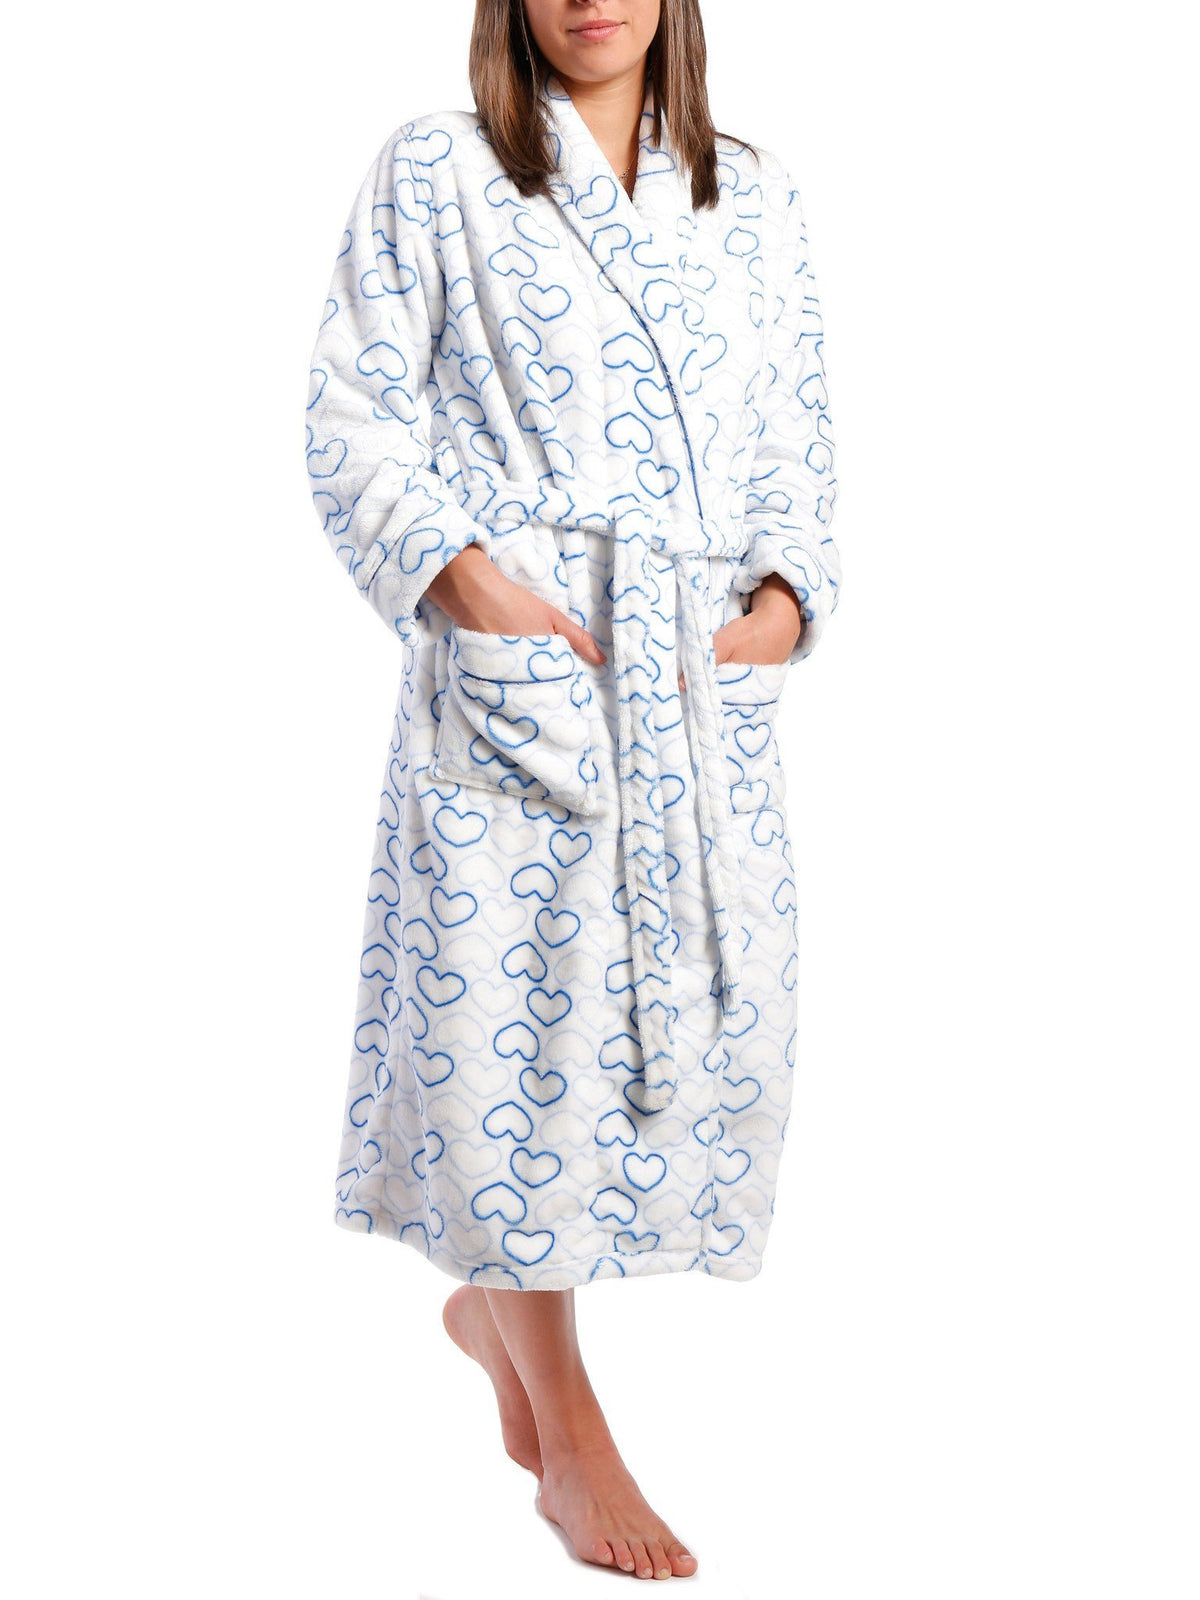 Women's Lush Butterfleece Spa/Bath Robe - Tile of Hearts - White/Blue